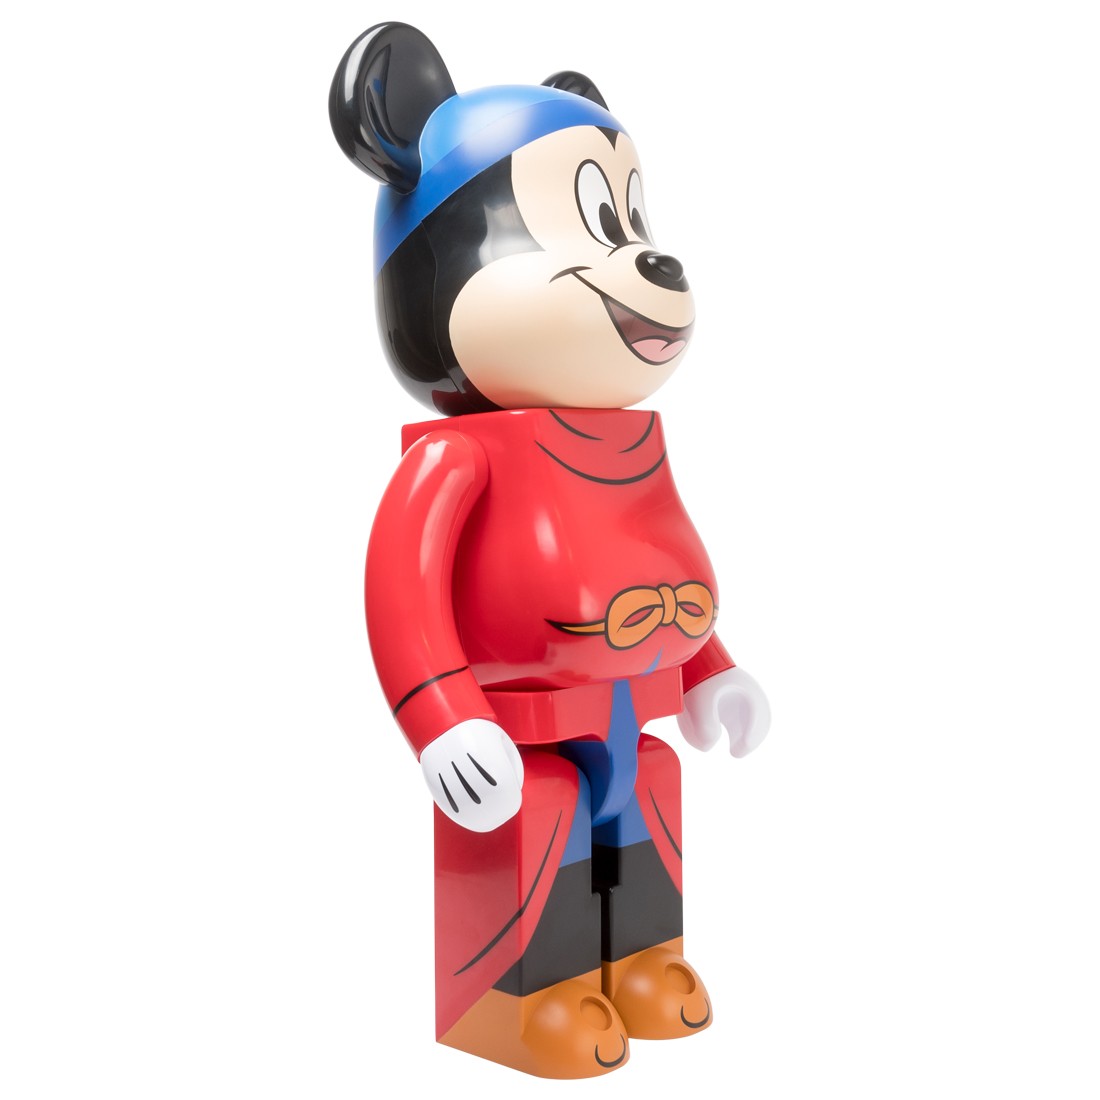 Medicom Disney Fantasia Mickey Mouse 1000% Bearbrick Figure red